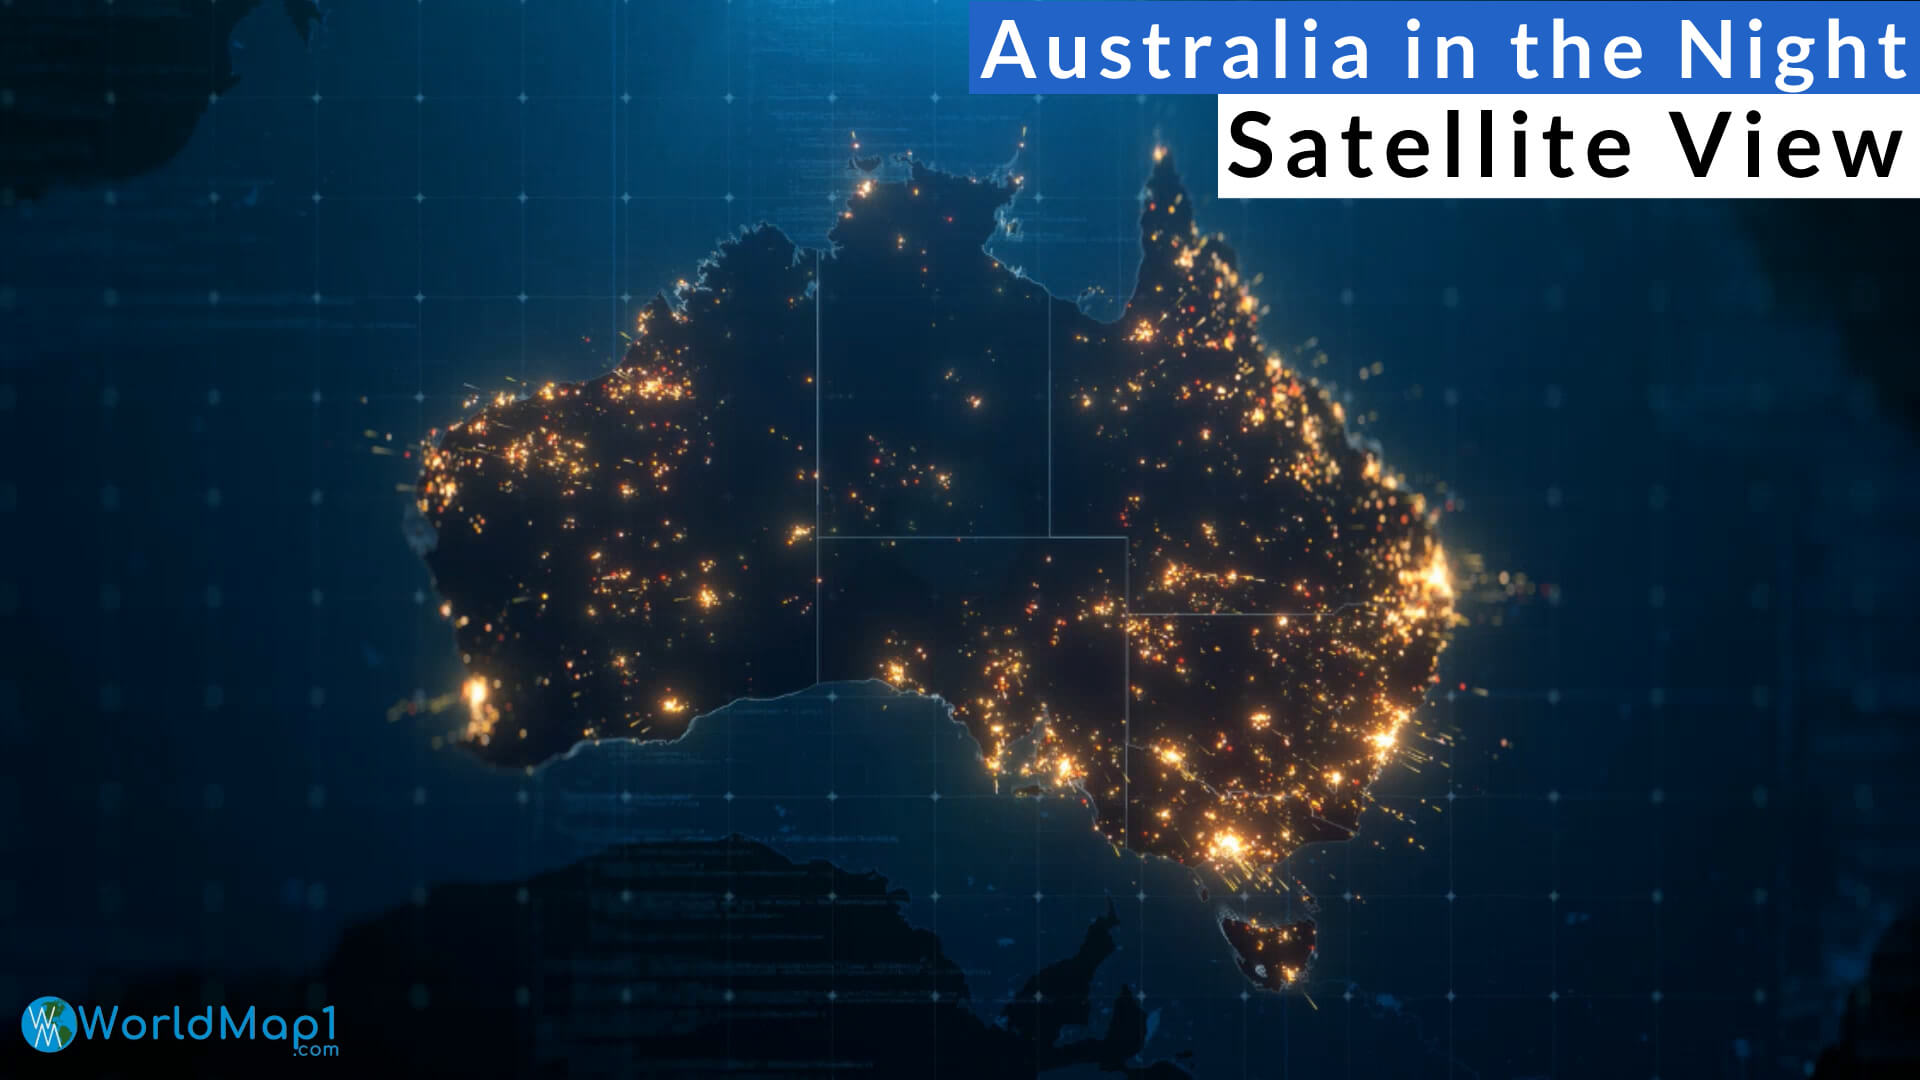 Australia in the Night Satellite View